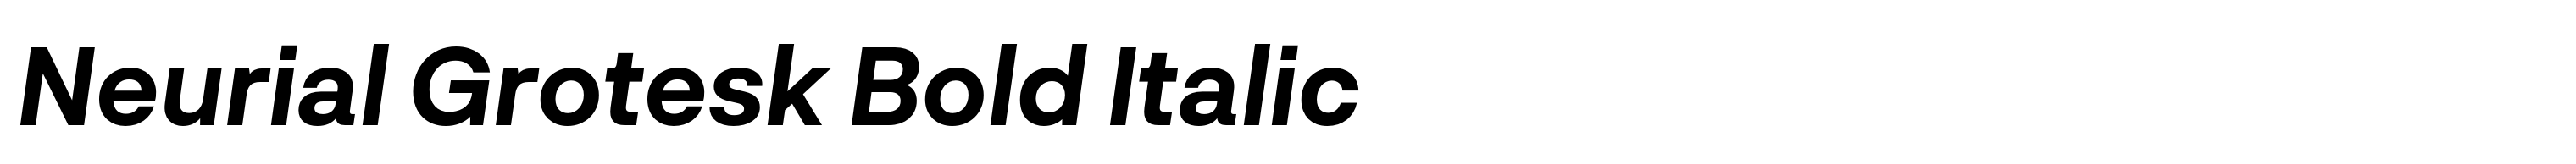 Neurial Grotesk Bold Italic